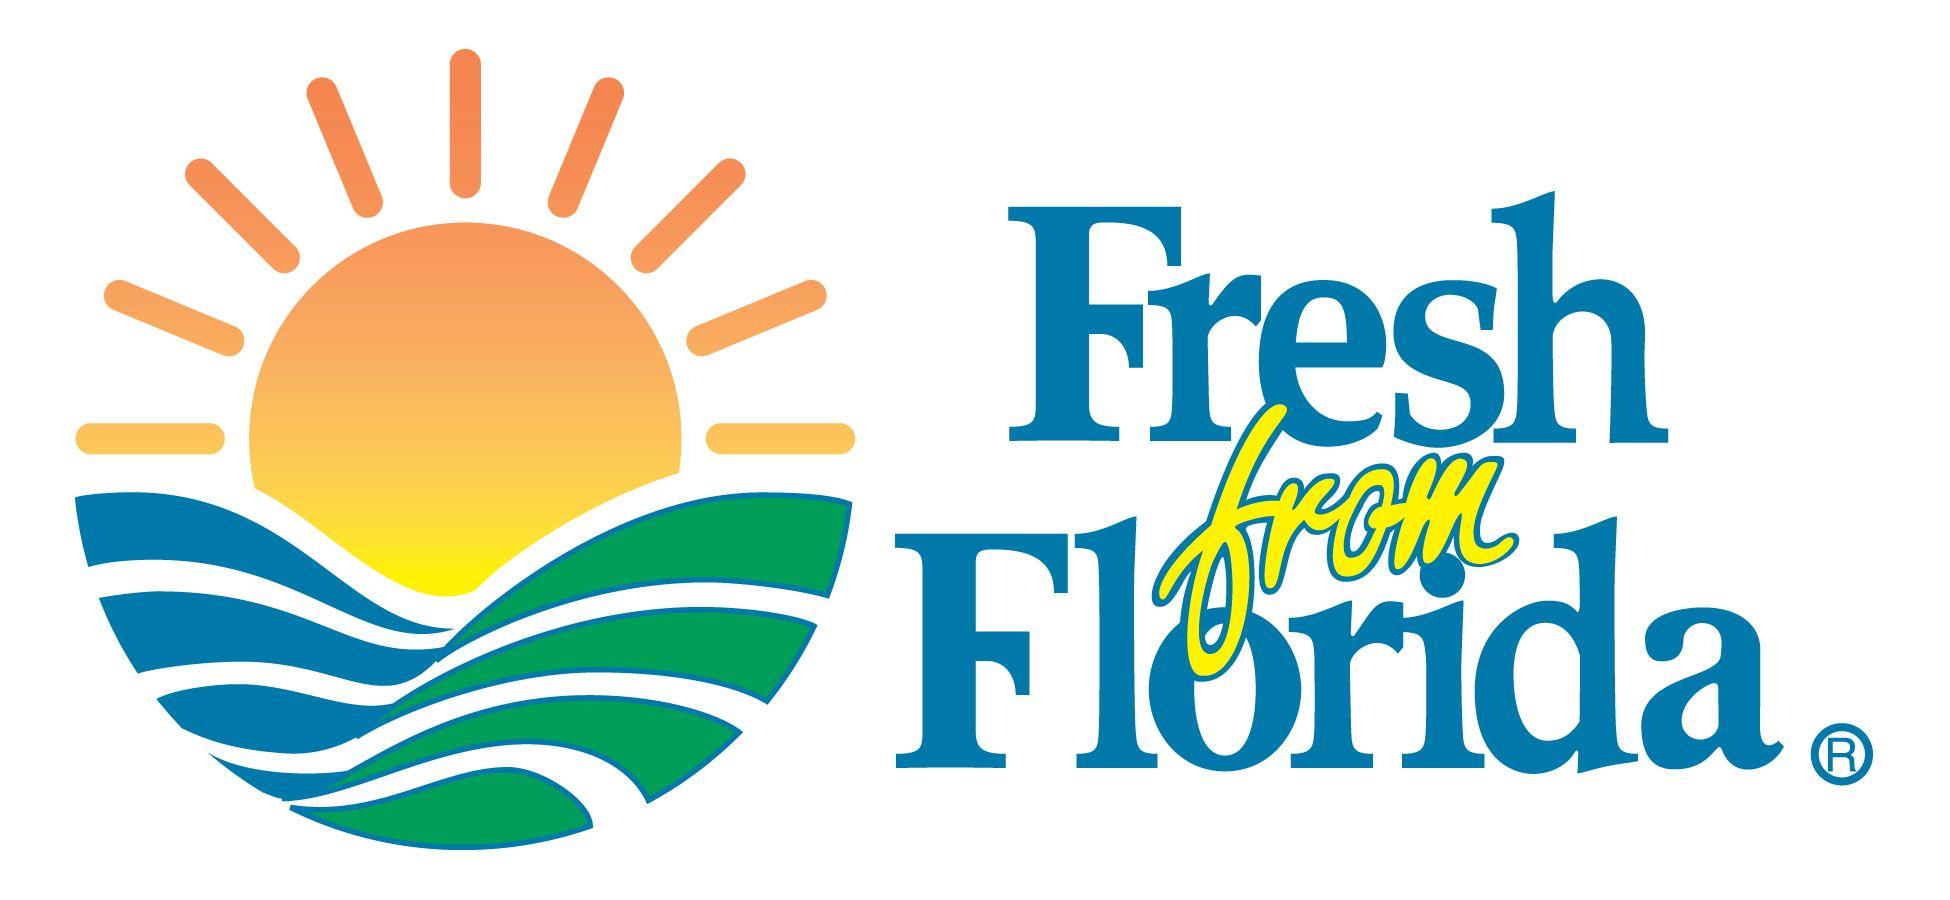 FL Logo - Florida Logos